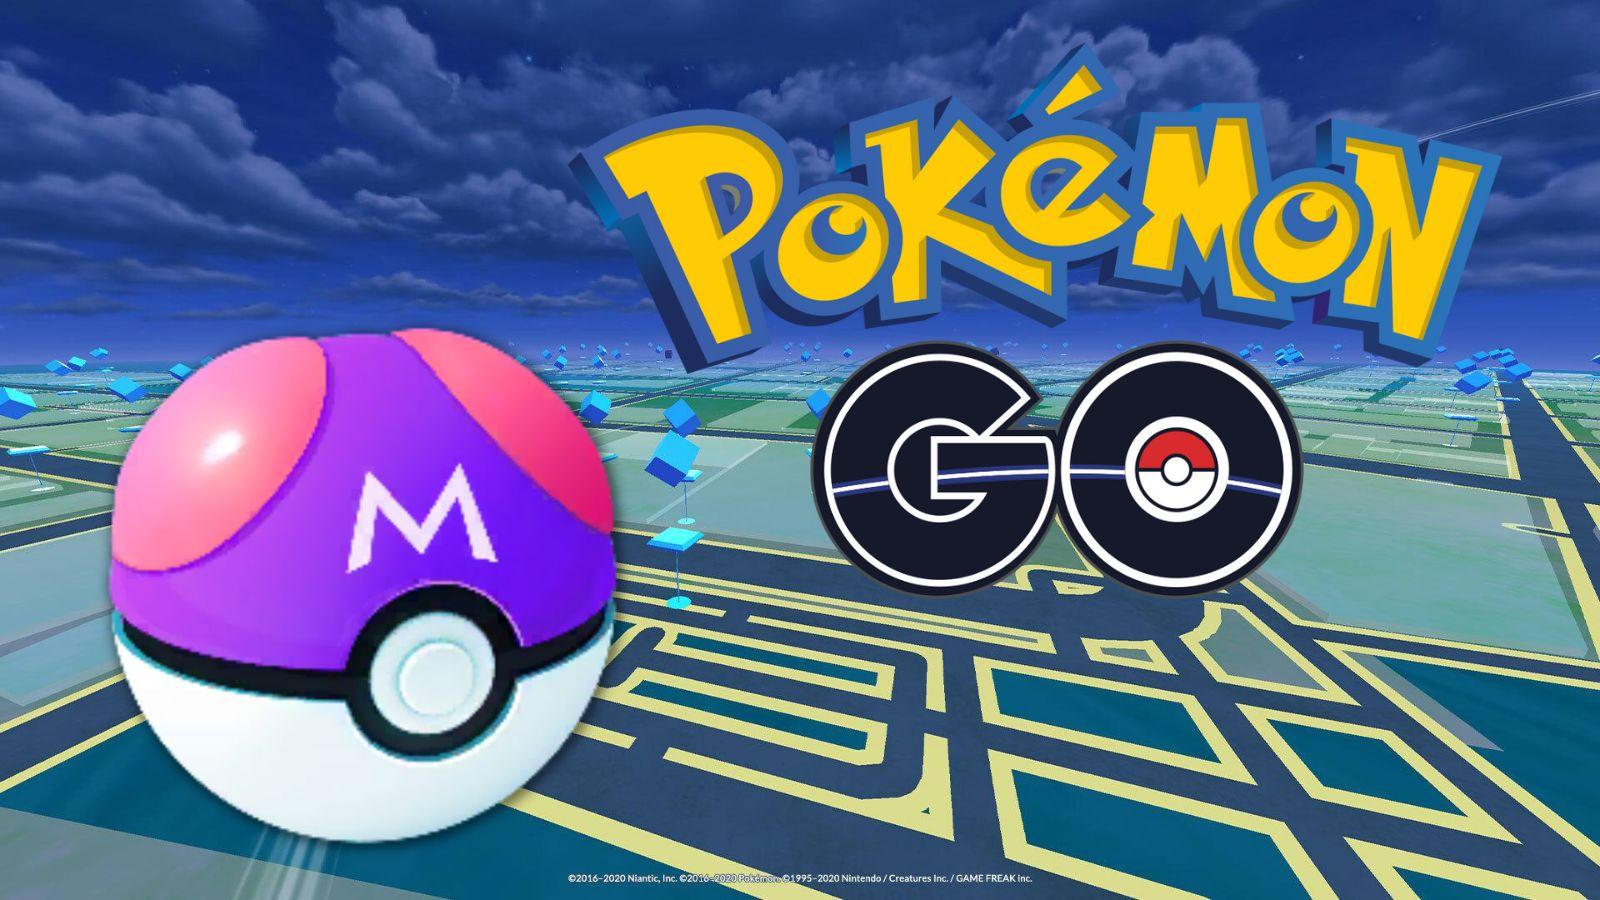 Pokemon Go: Pokemon Go updates: How to Obtain the Master Ball